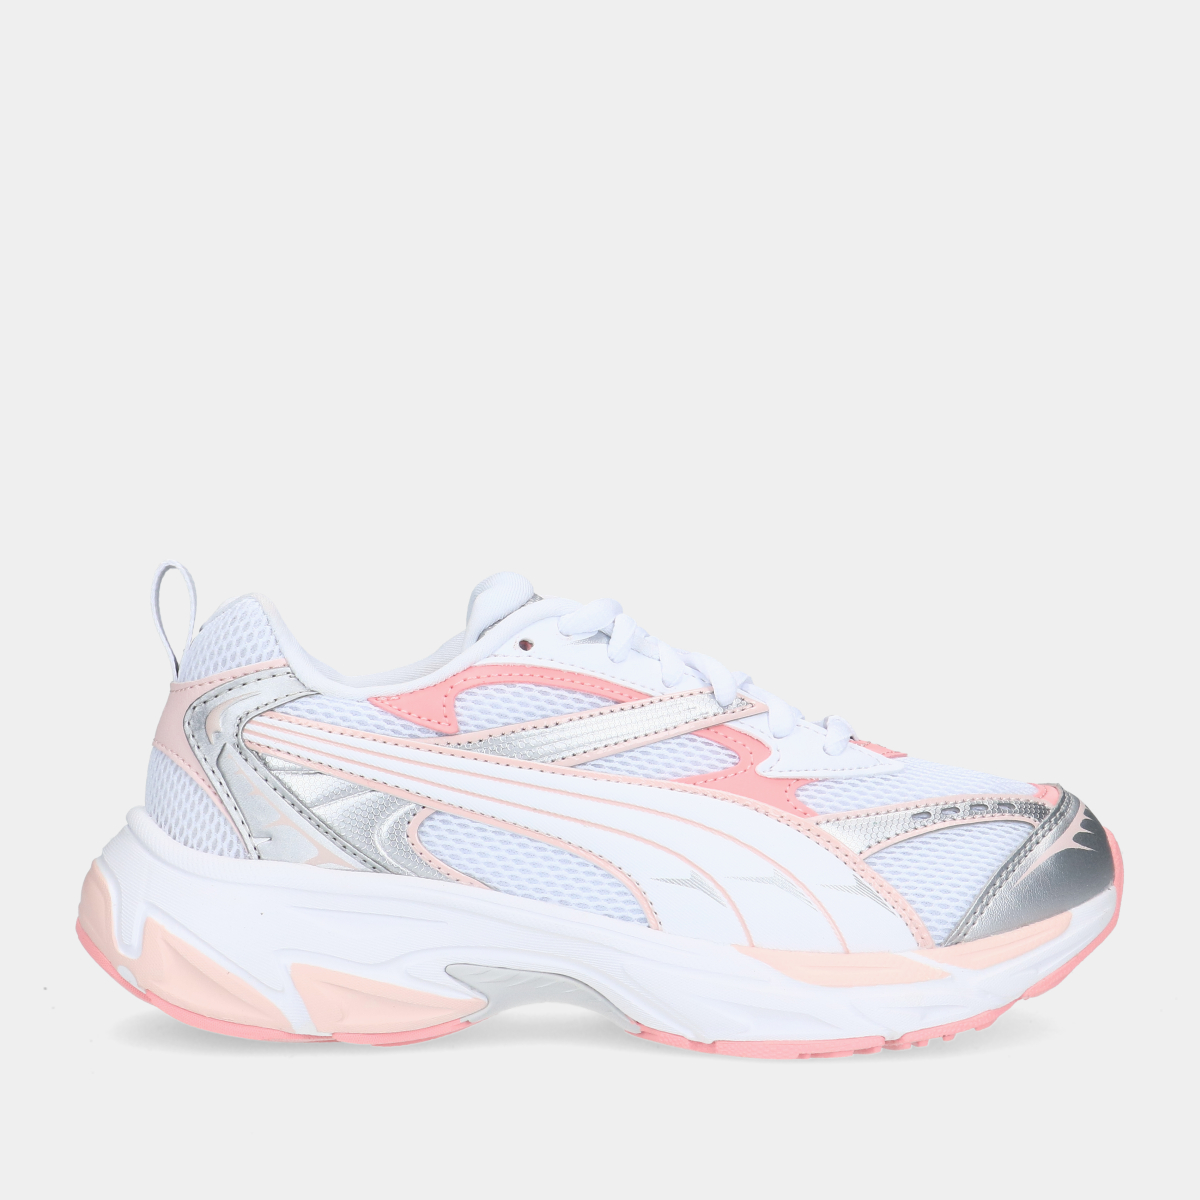 Puma Morphic White/ Pink dames sneakers